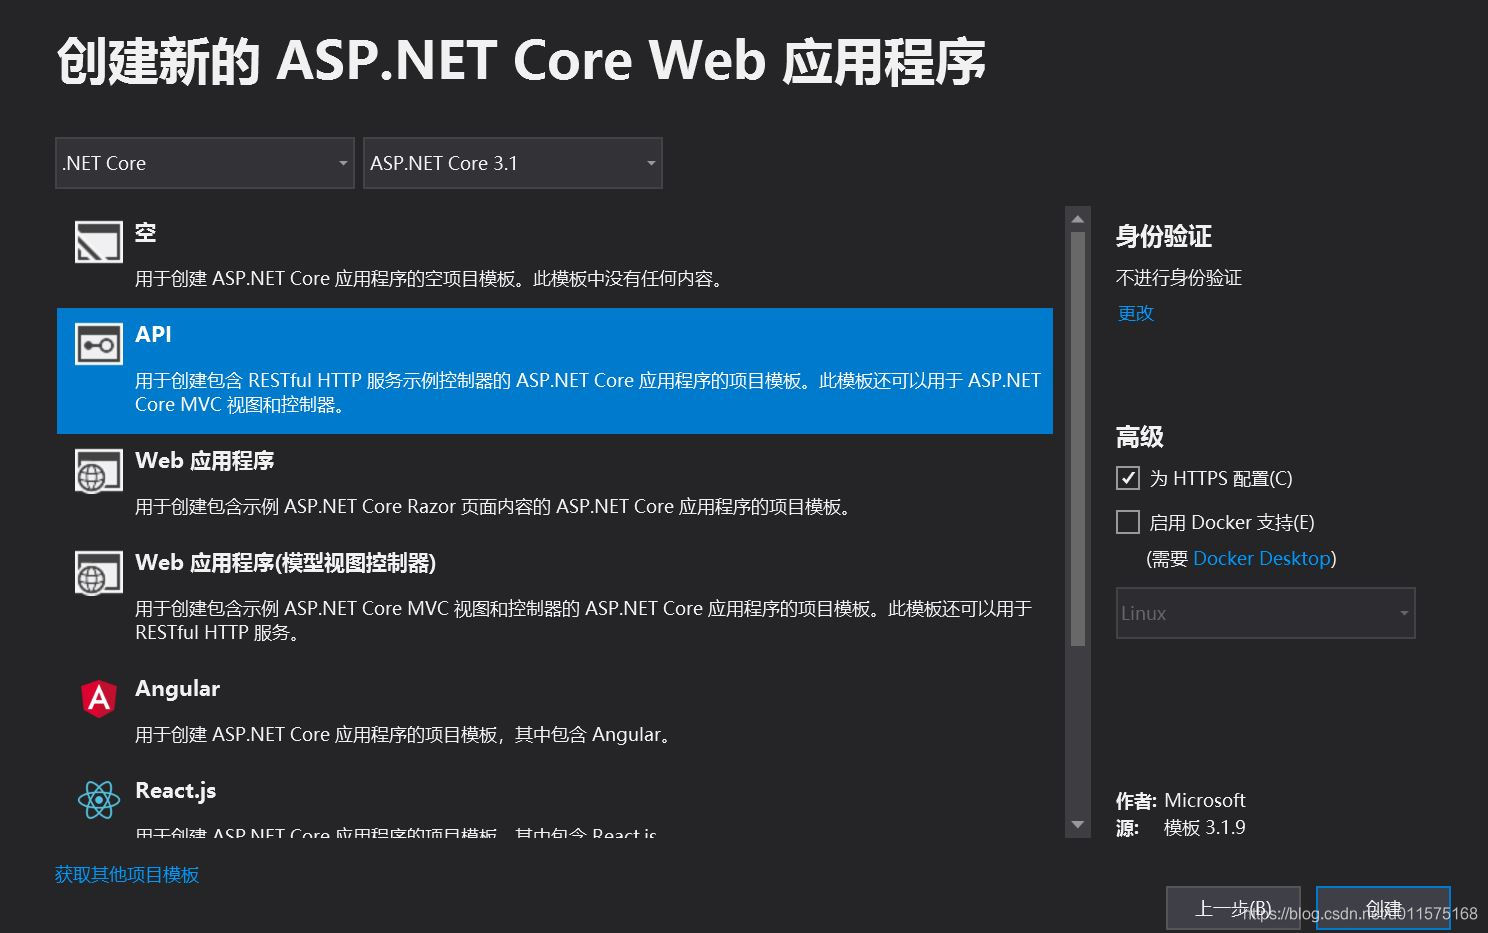 asp.net core web api